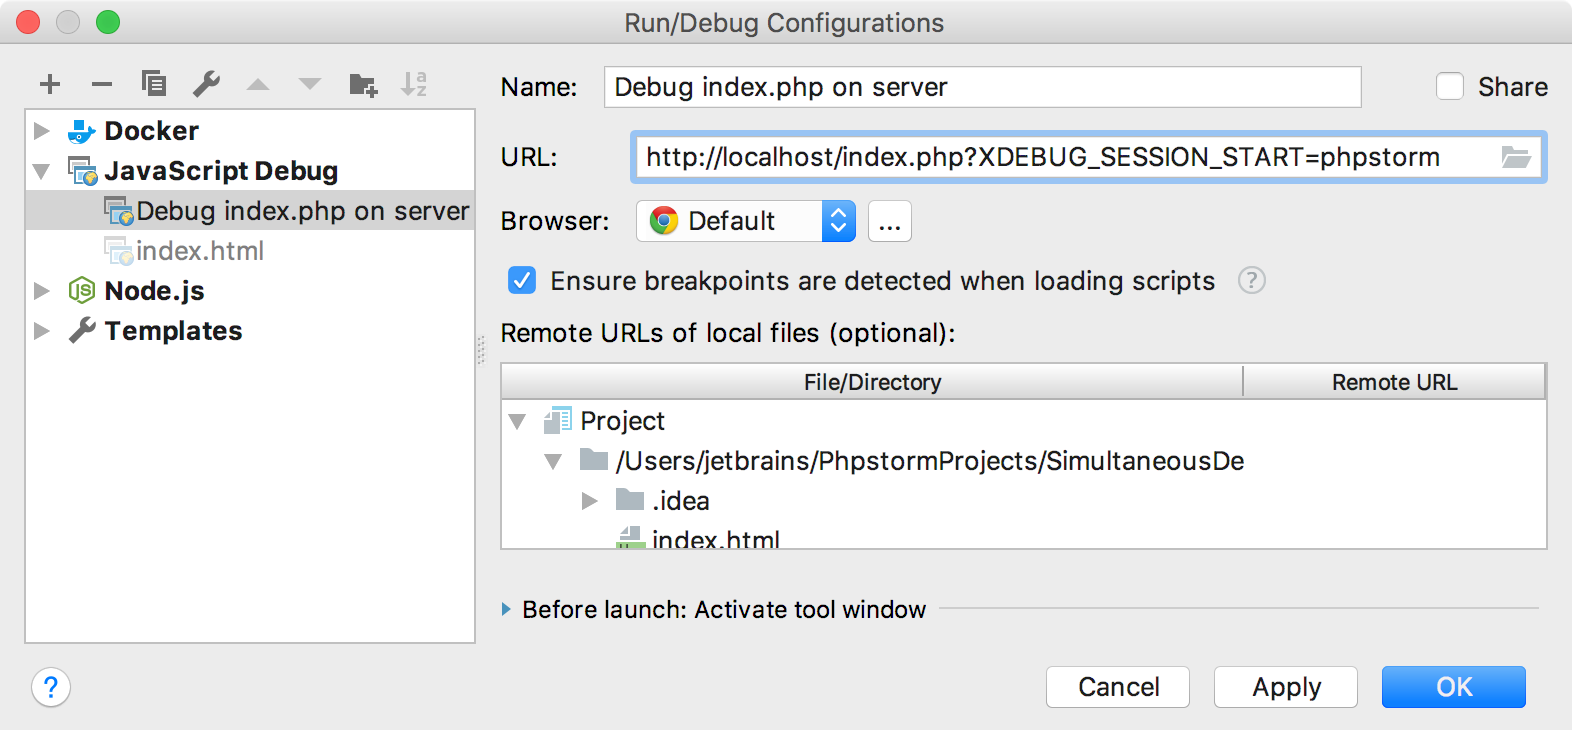 URL parameter for the Run/Debug configuration